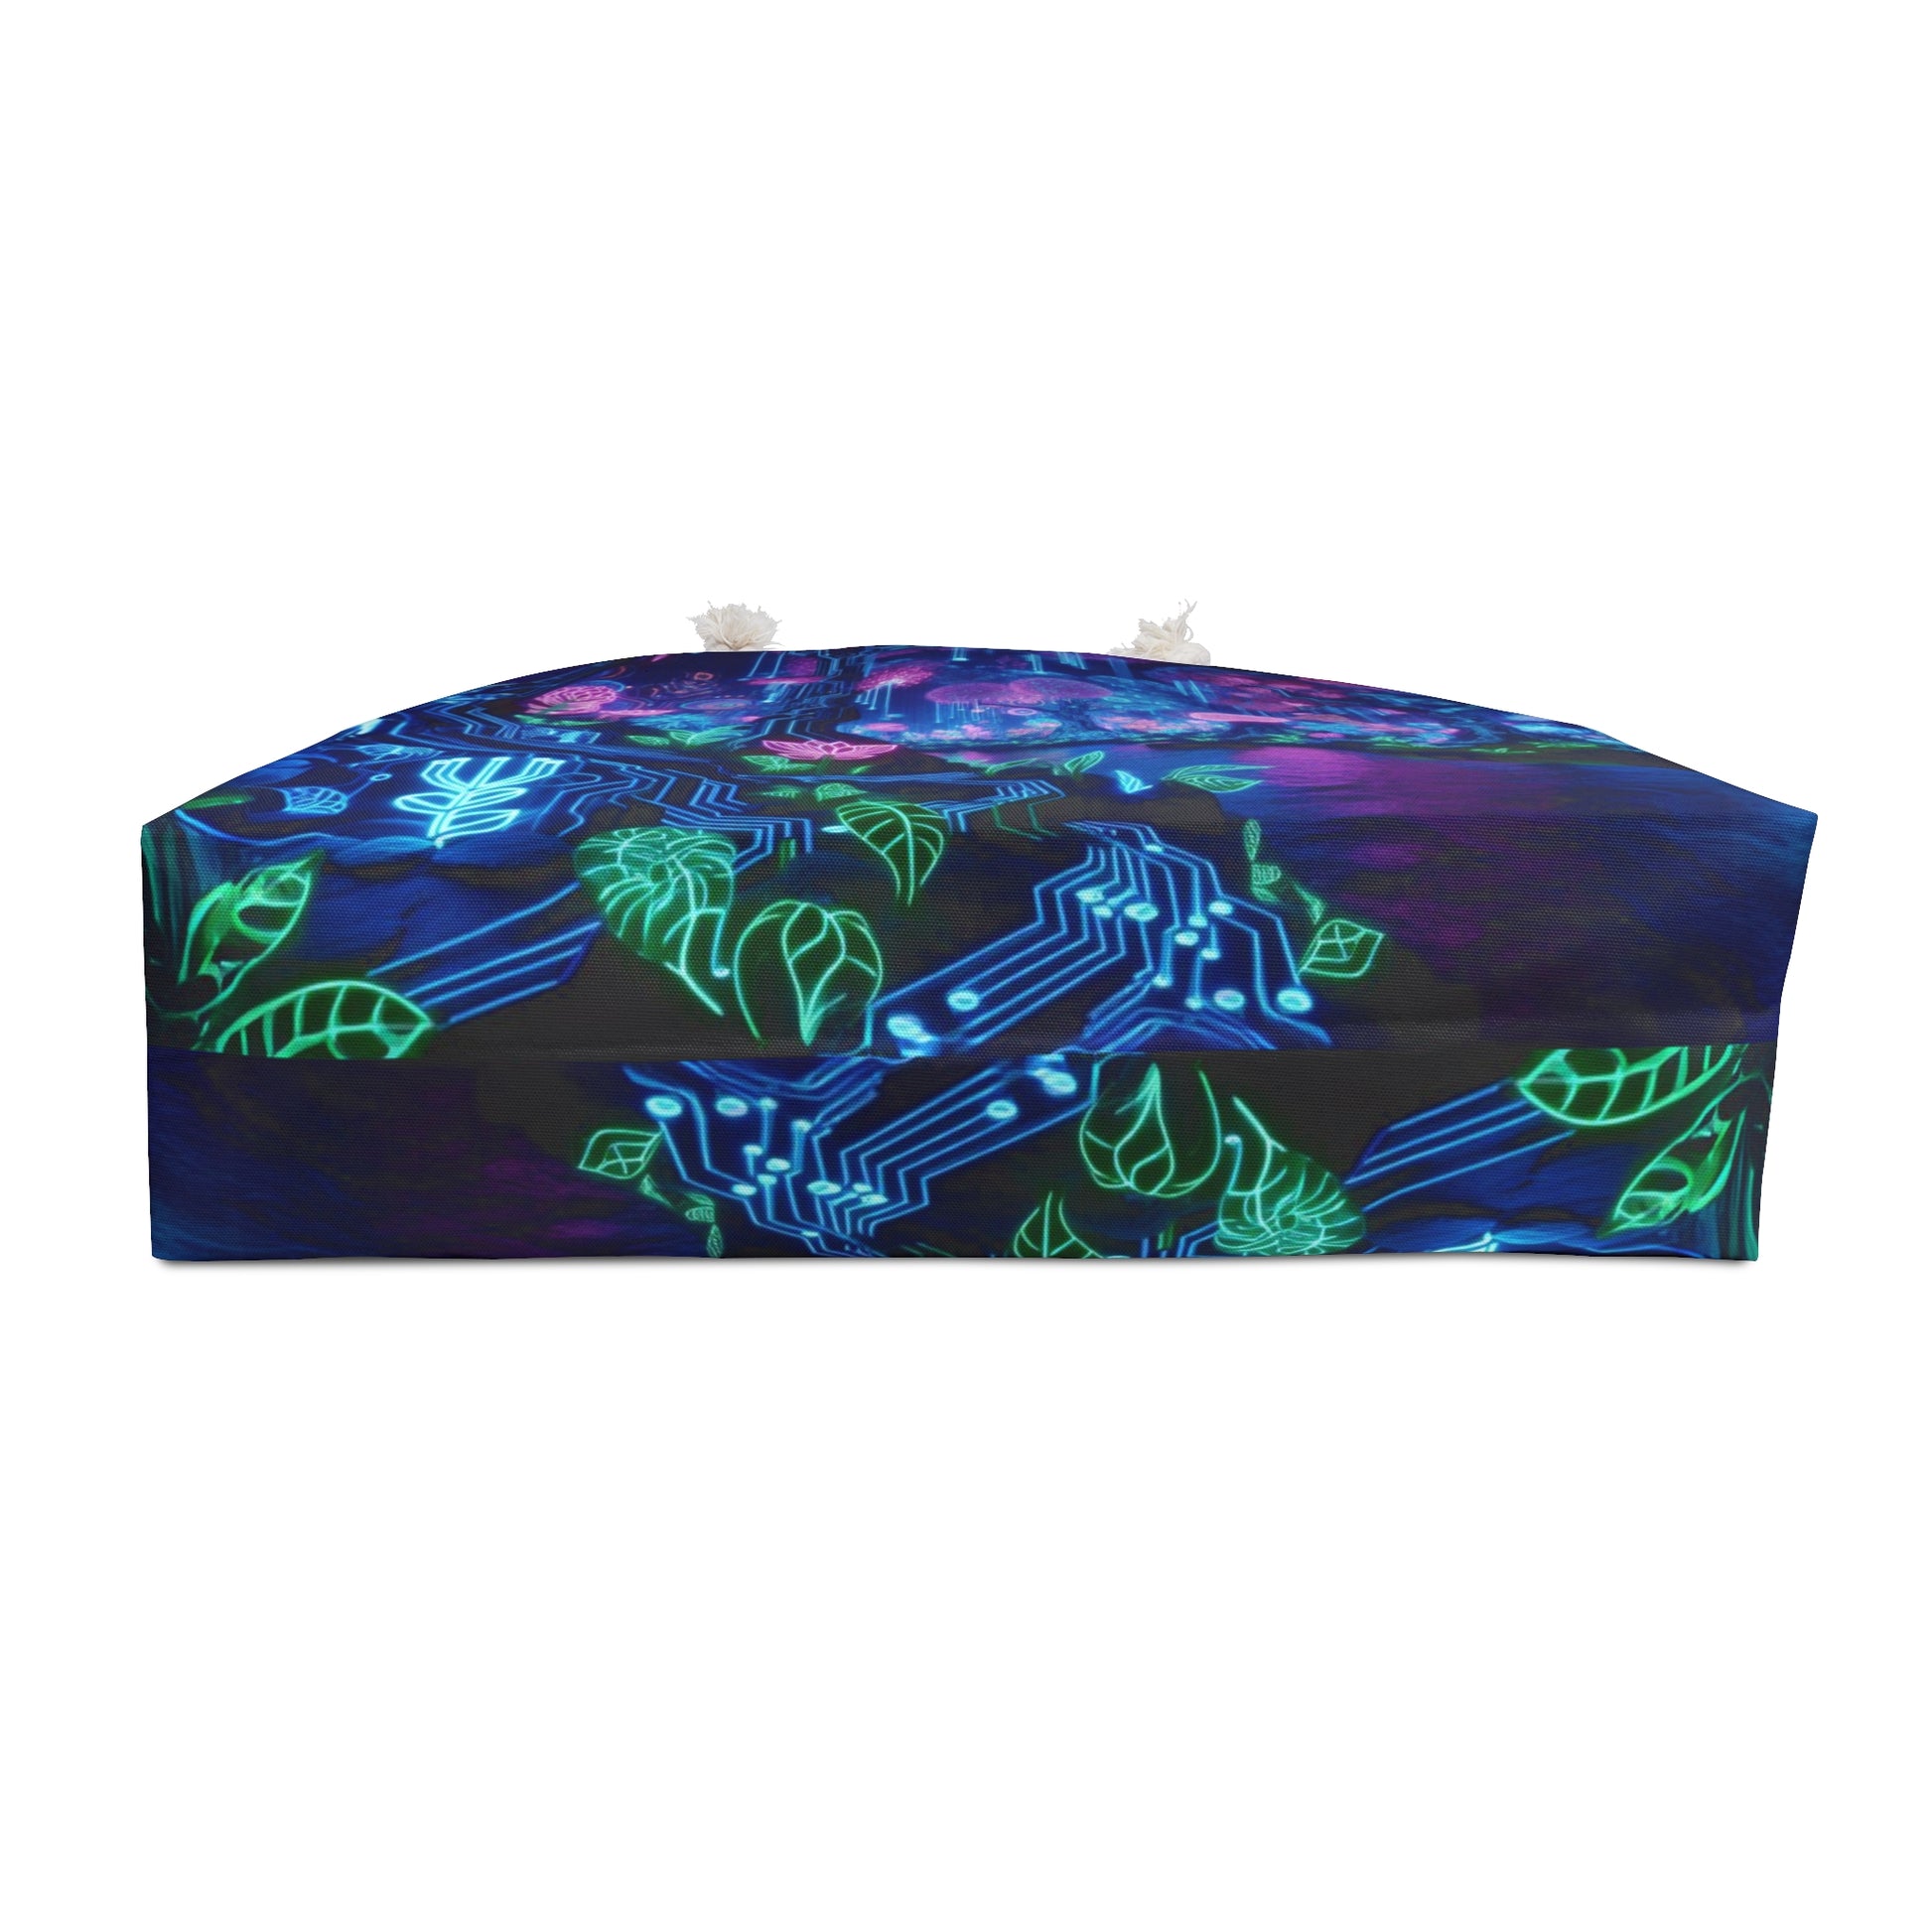 Spacious polyester Weekender Bag (Neon-lit jungle)